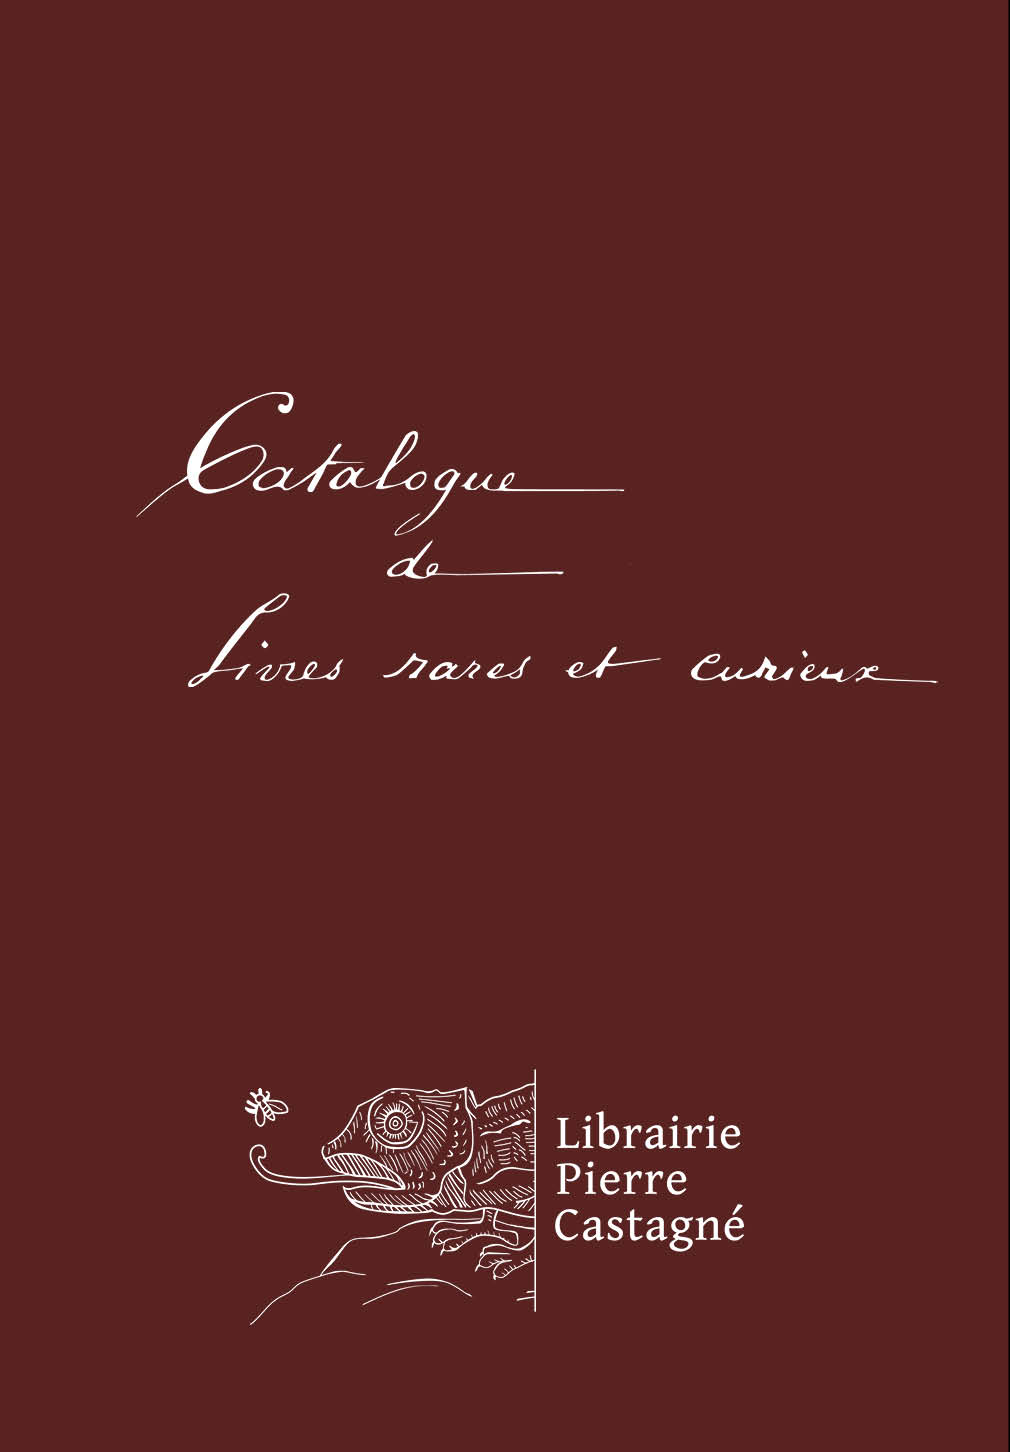 11 Catalogue de livres rares et curieux V